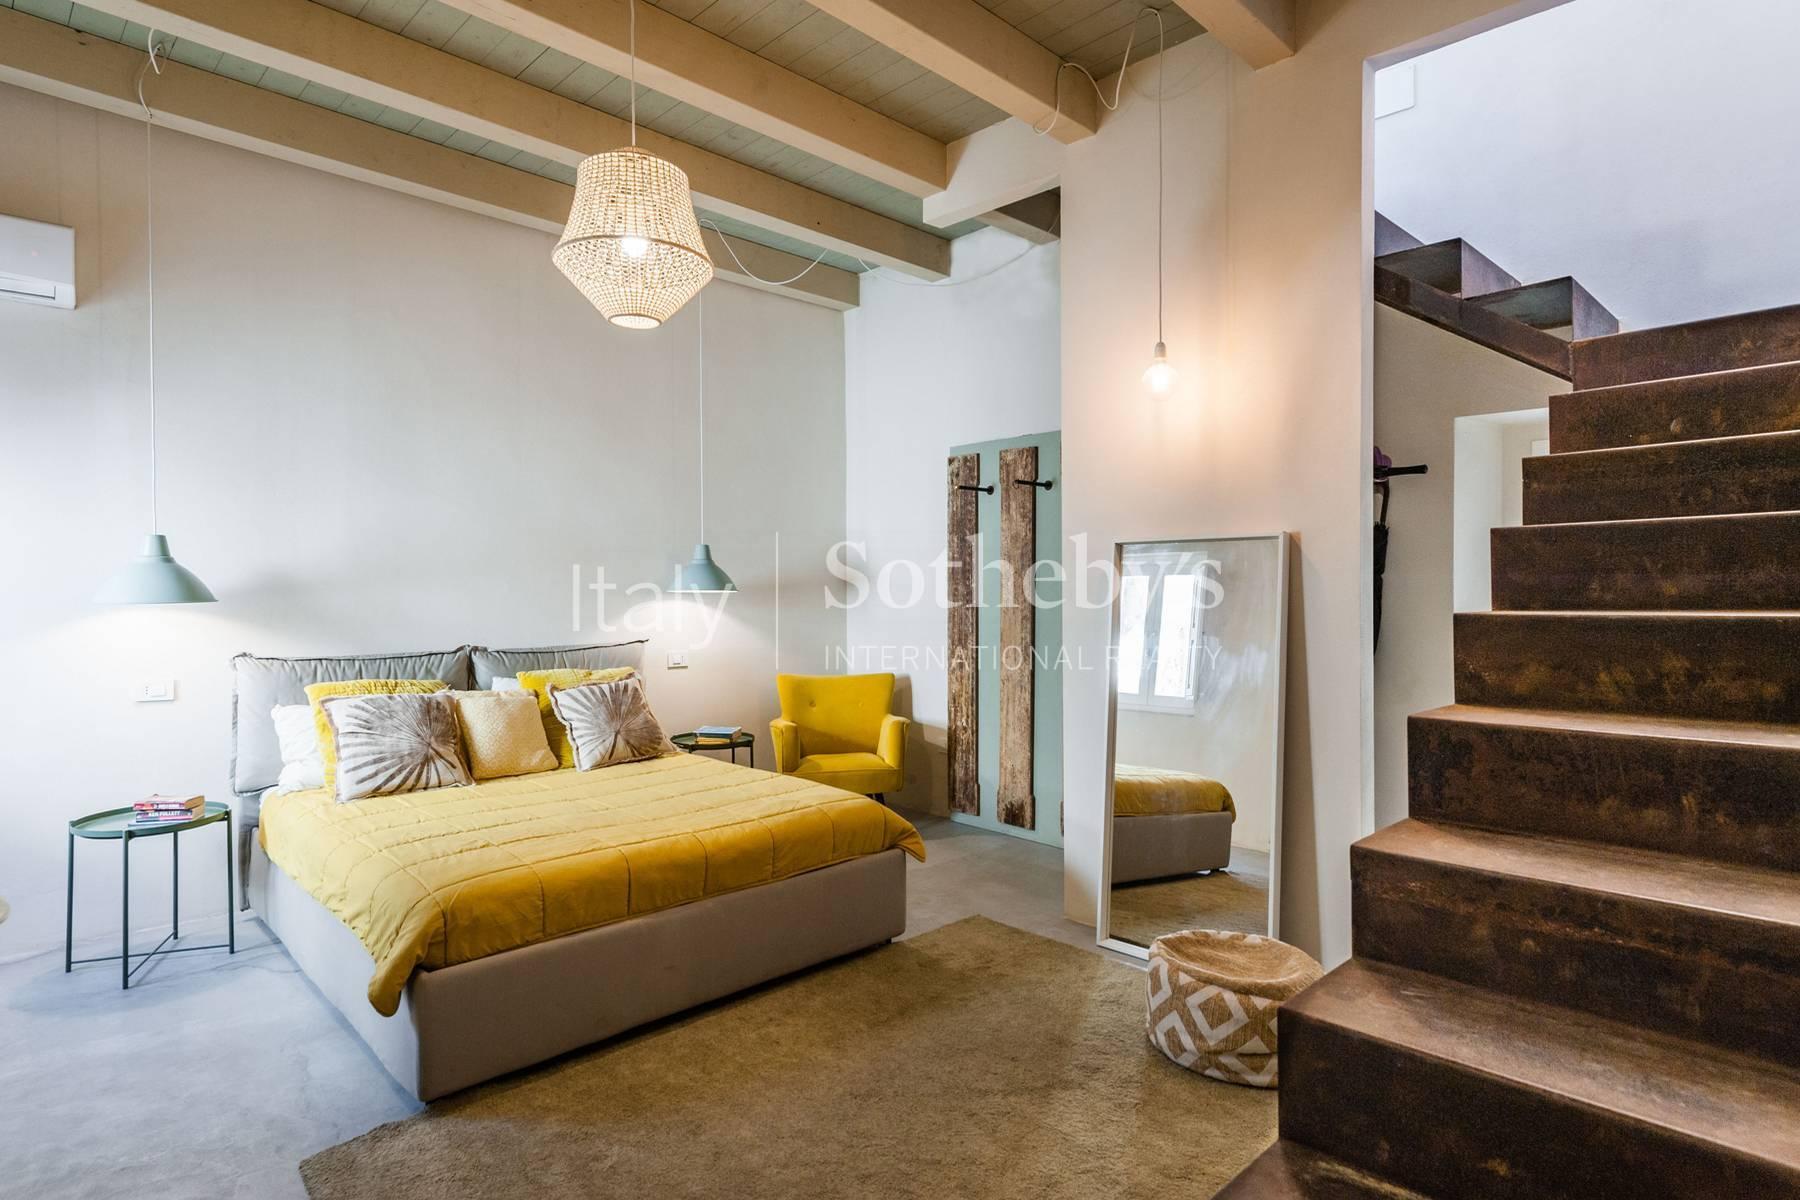 Apartment in Ortigia on the Giudecca with double terrace - 8